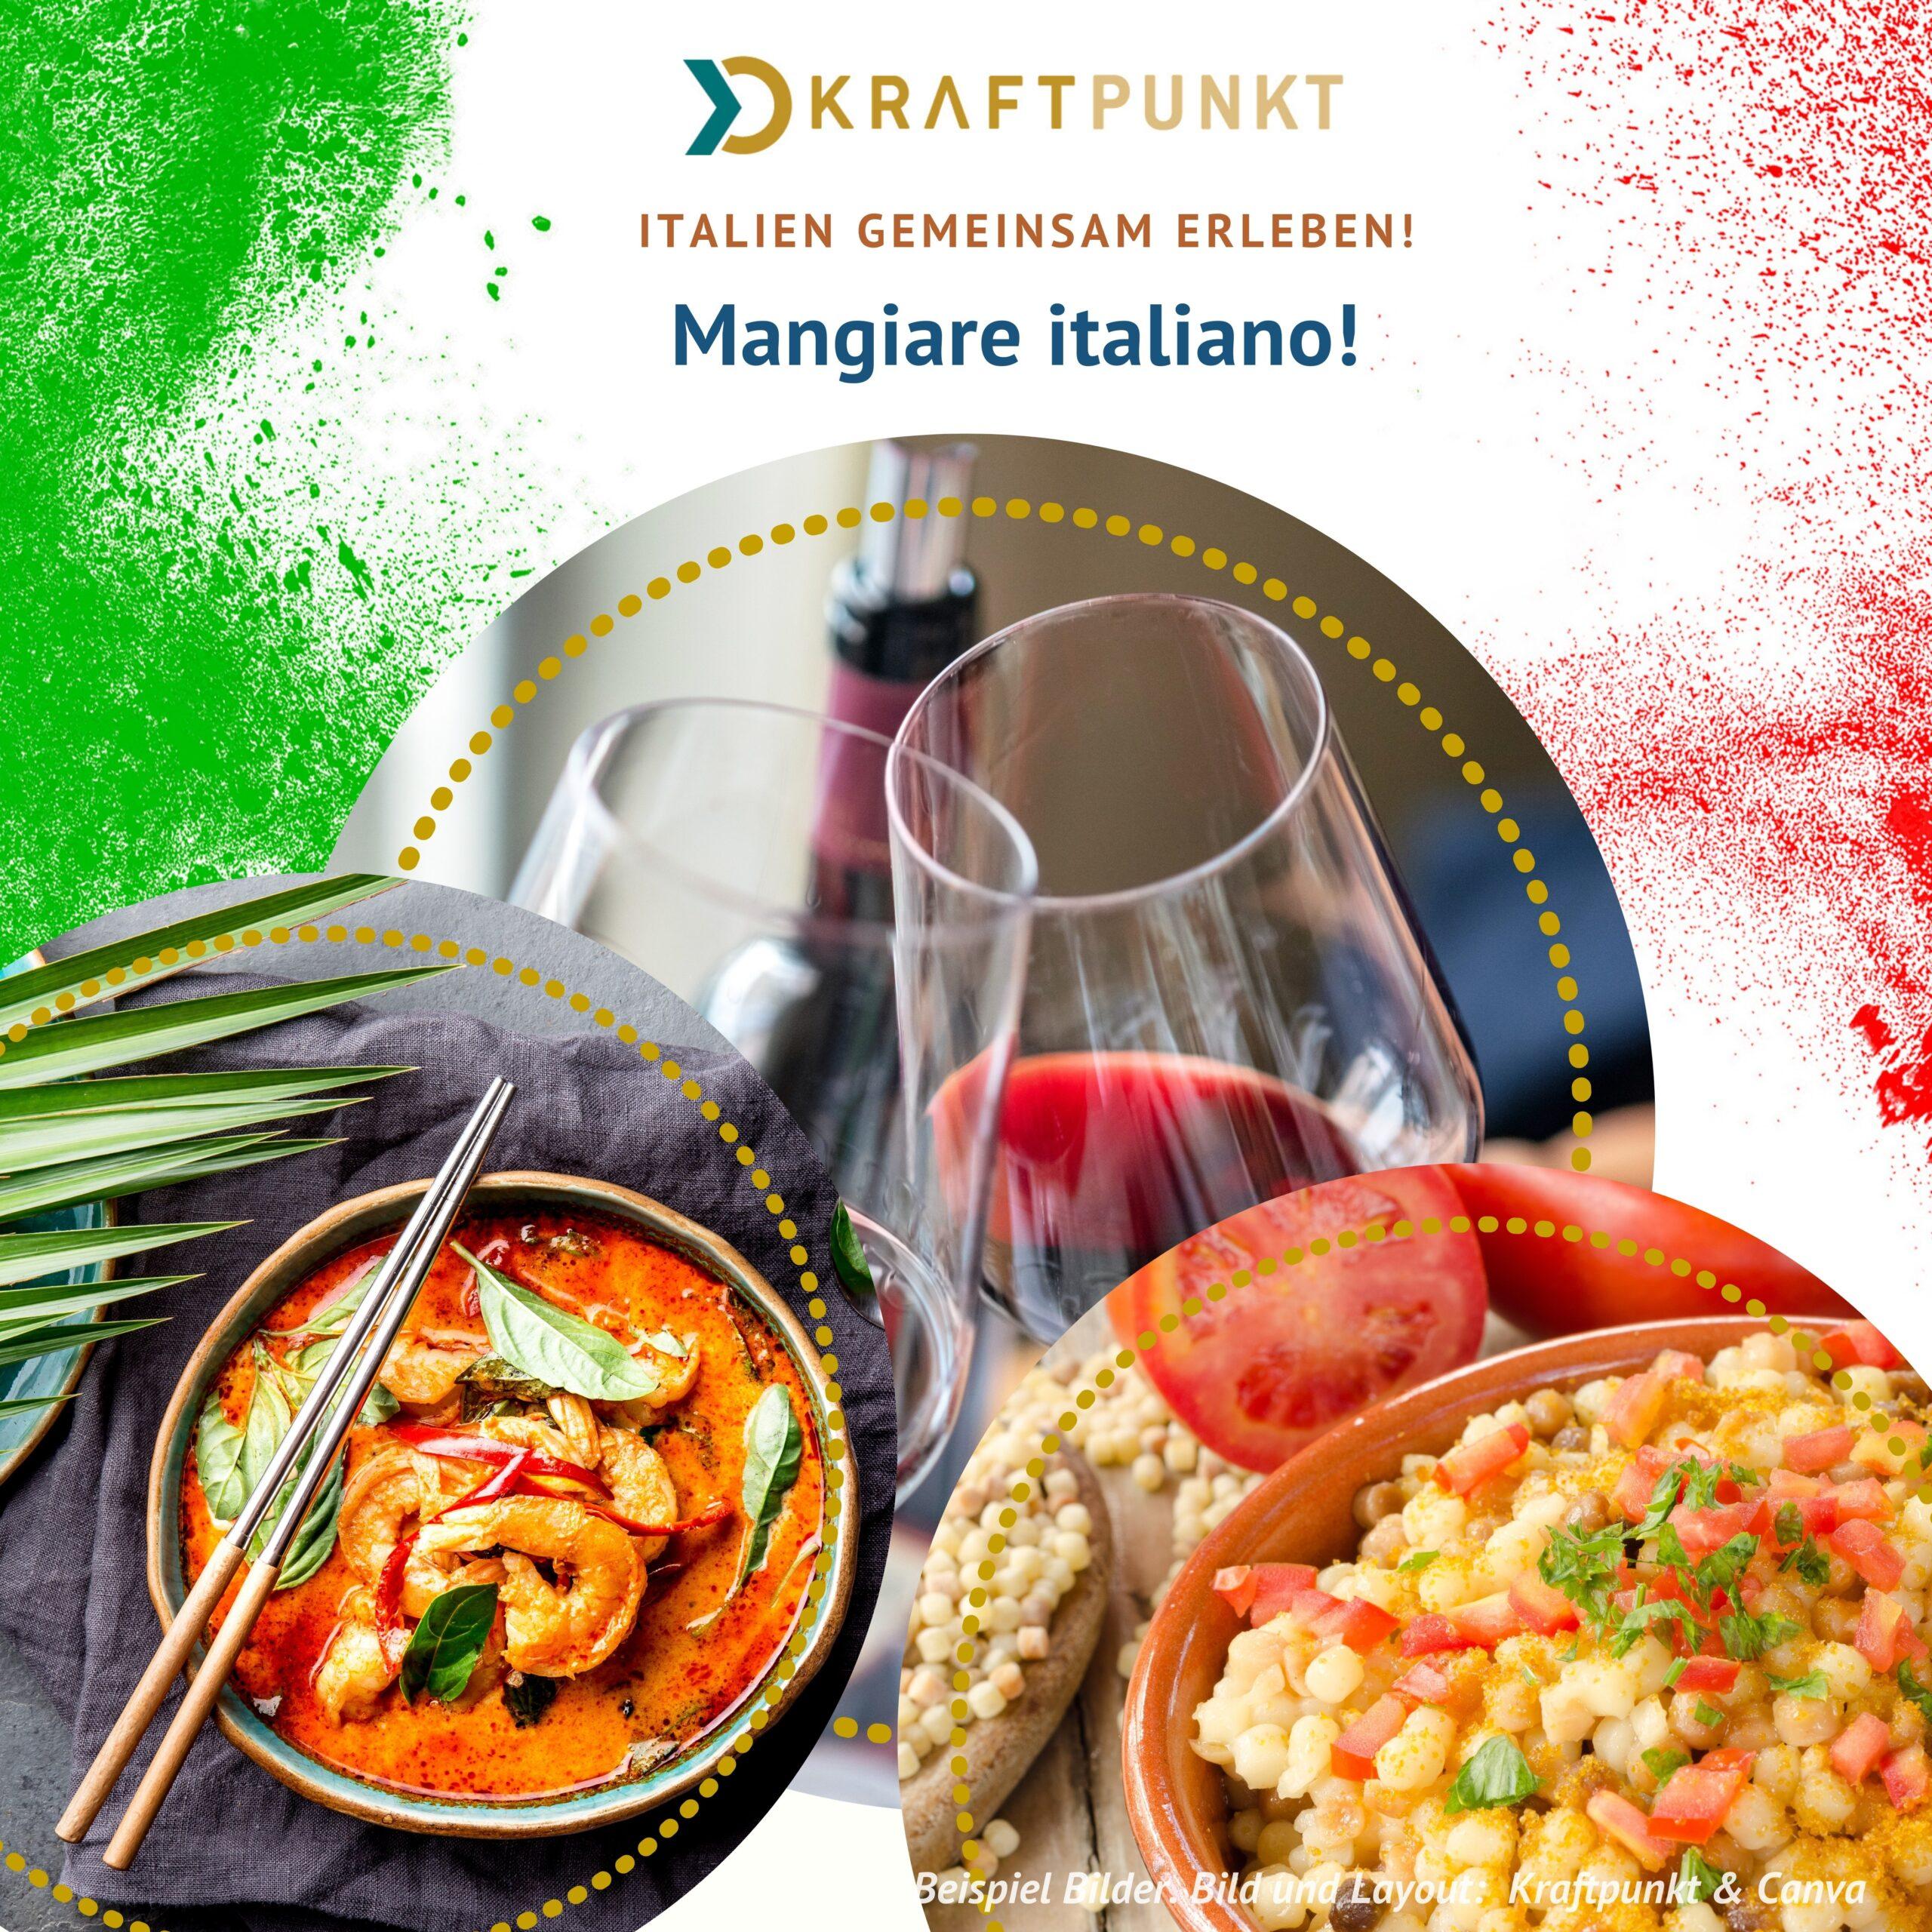 Italienischer Kochkurs, dolce vita, Italien, Mangiare Italiano, Kraftpunkt, Feier, Sardinien, Apulien, Sizilien, kochen